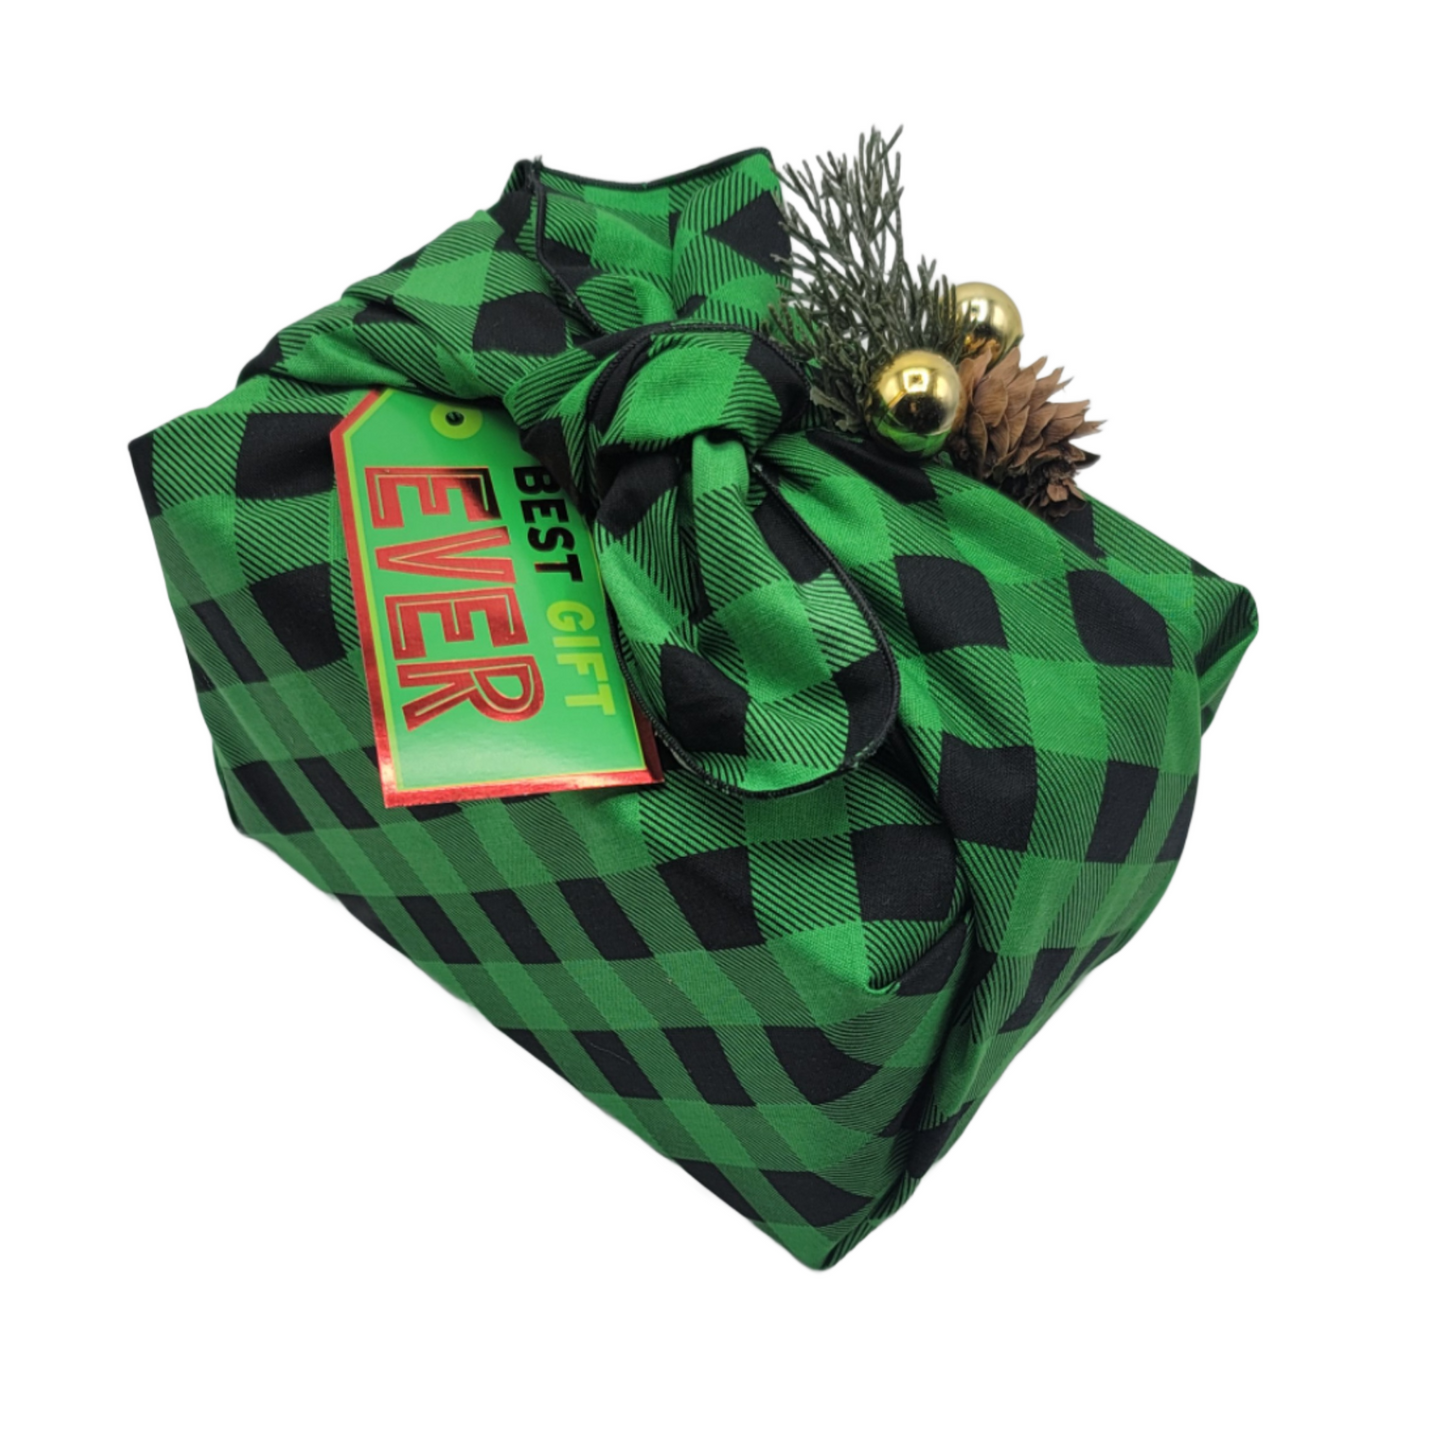 Furoshiki 3 pc Fabric Gift Wrap Kit - Holiday/Green and Black Buffalo Plaid